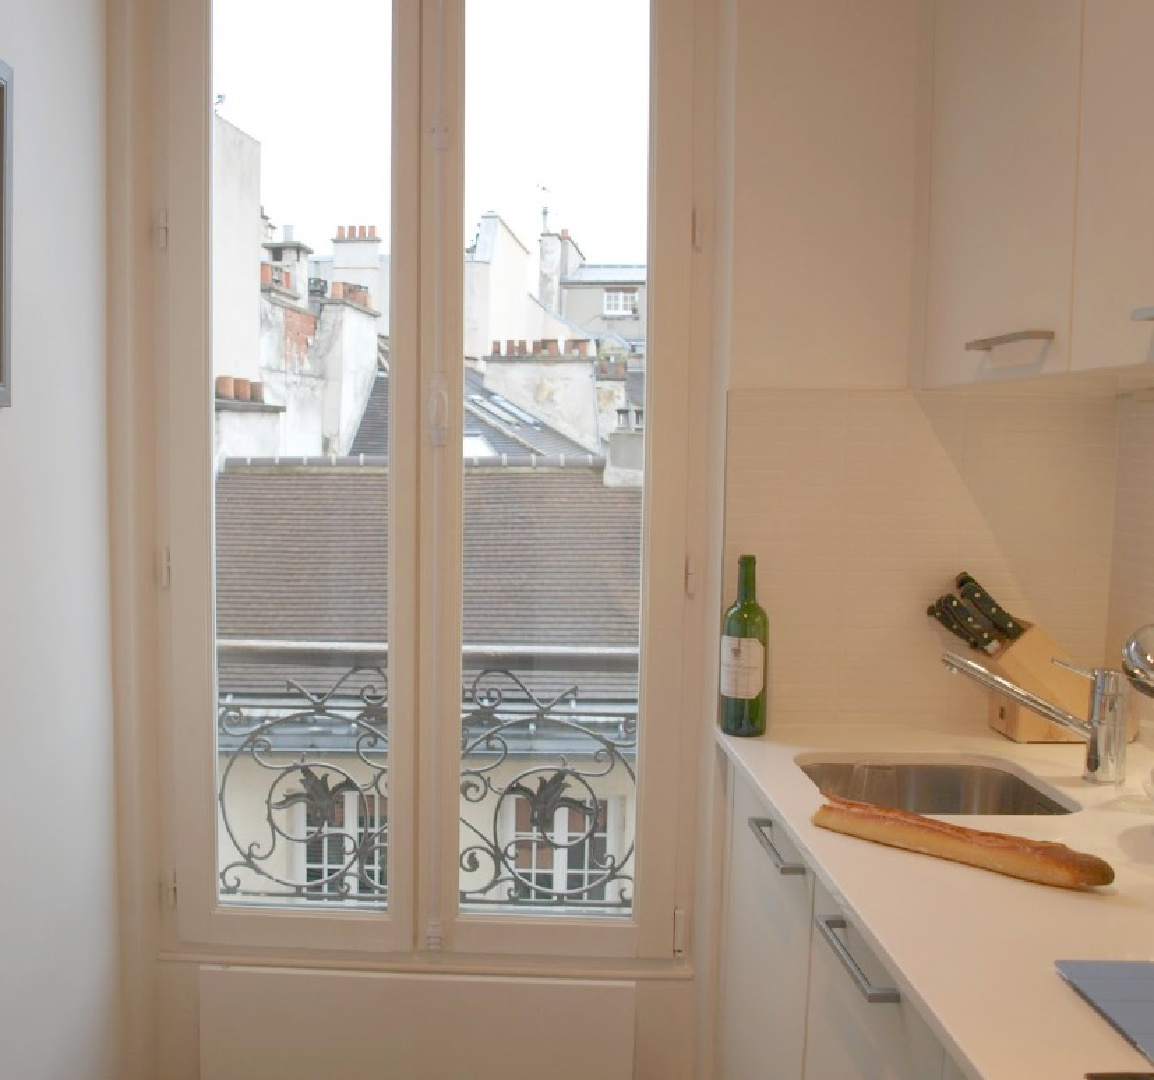 Modern Paris apartment white kitchen with windows and balcony - Hello Lovely Studio.